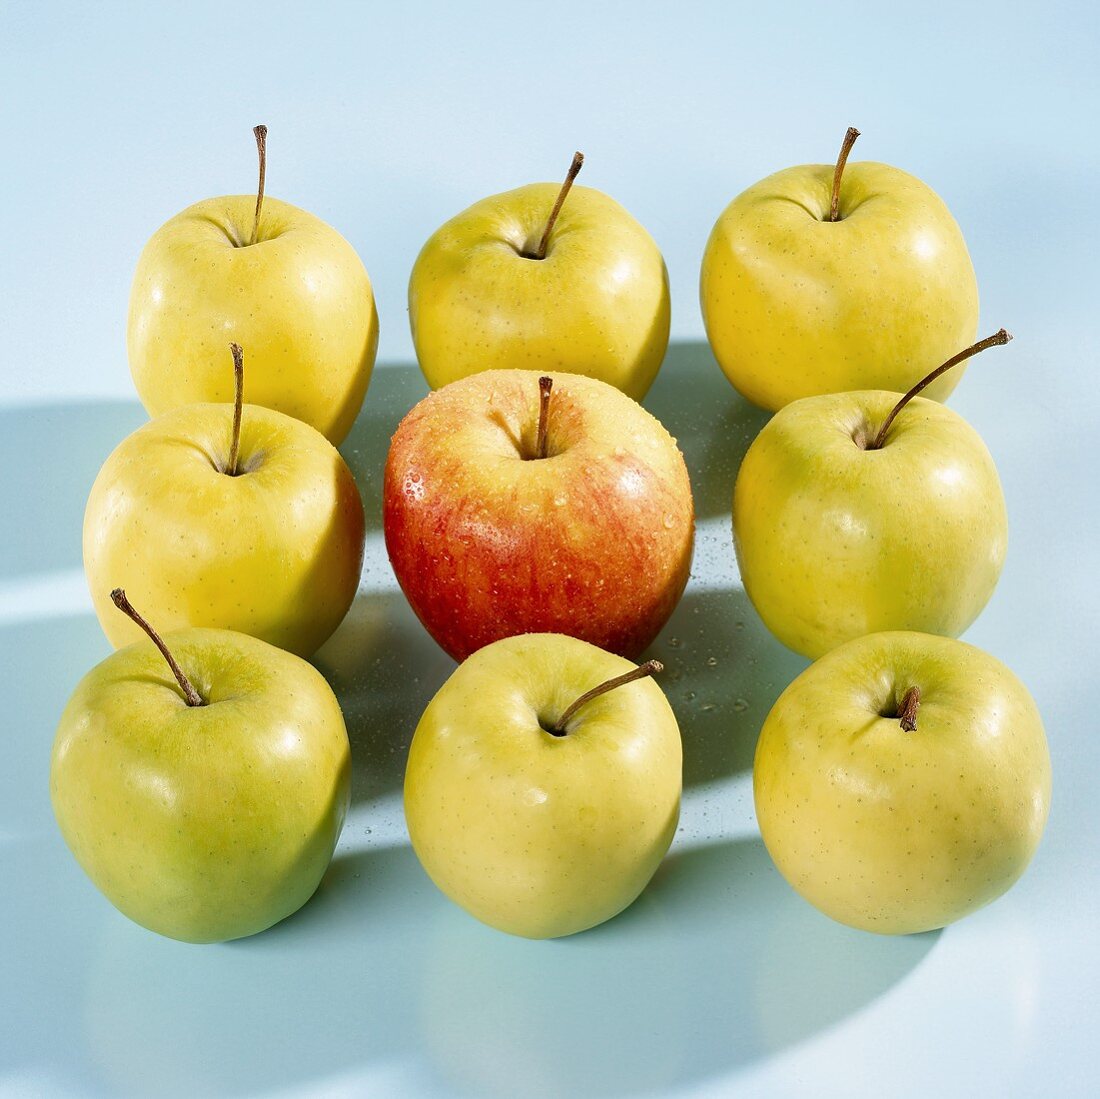 Nine Golden Delicious apples